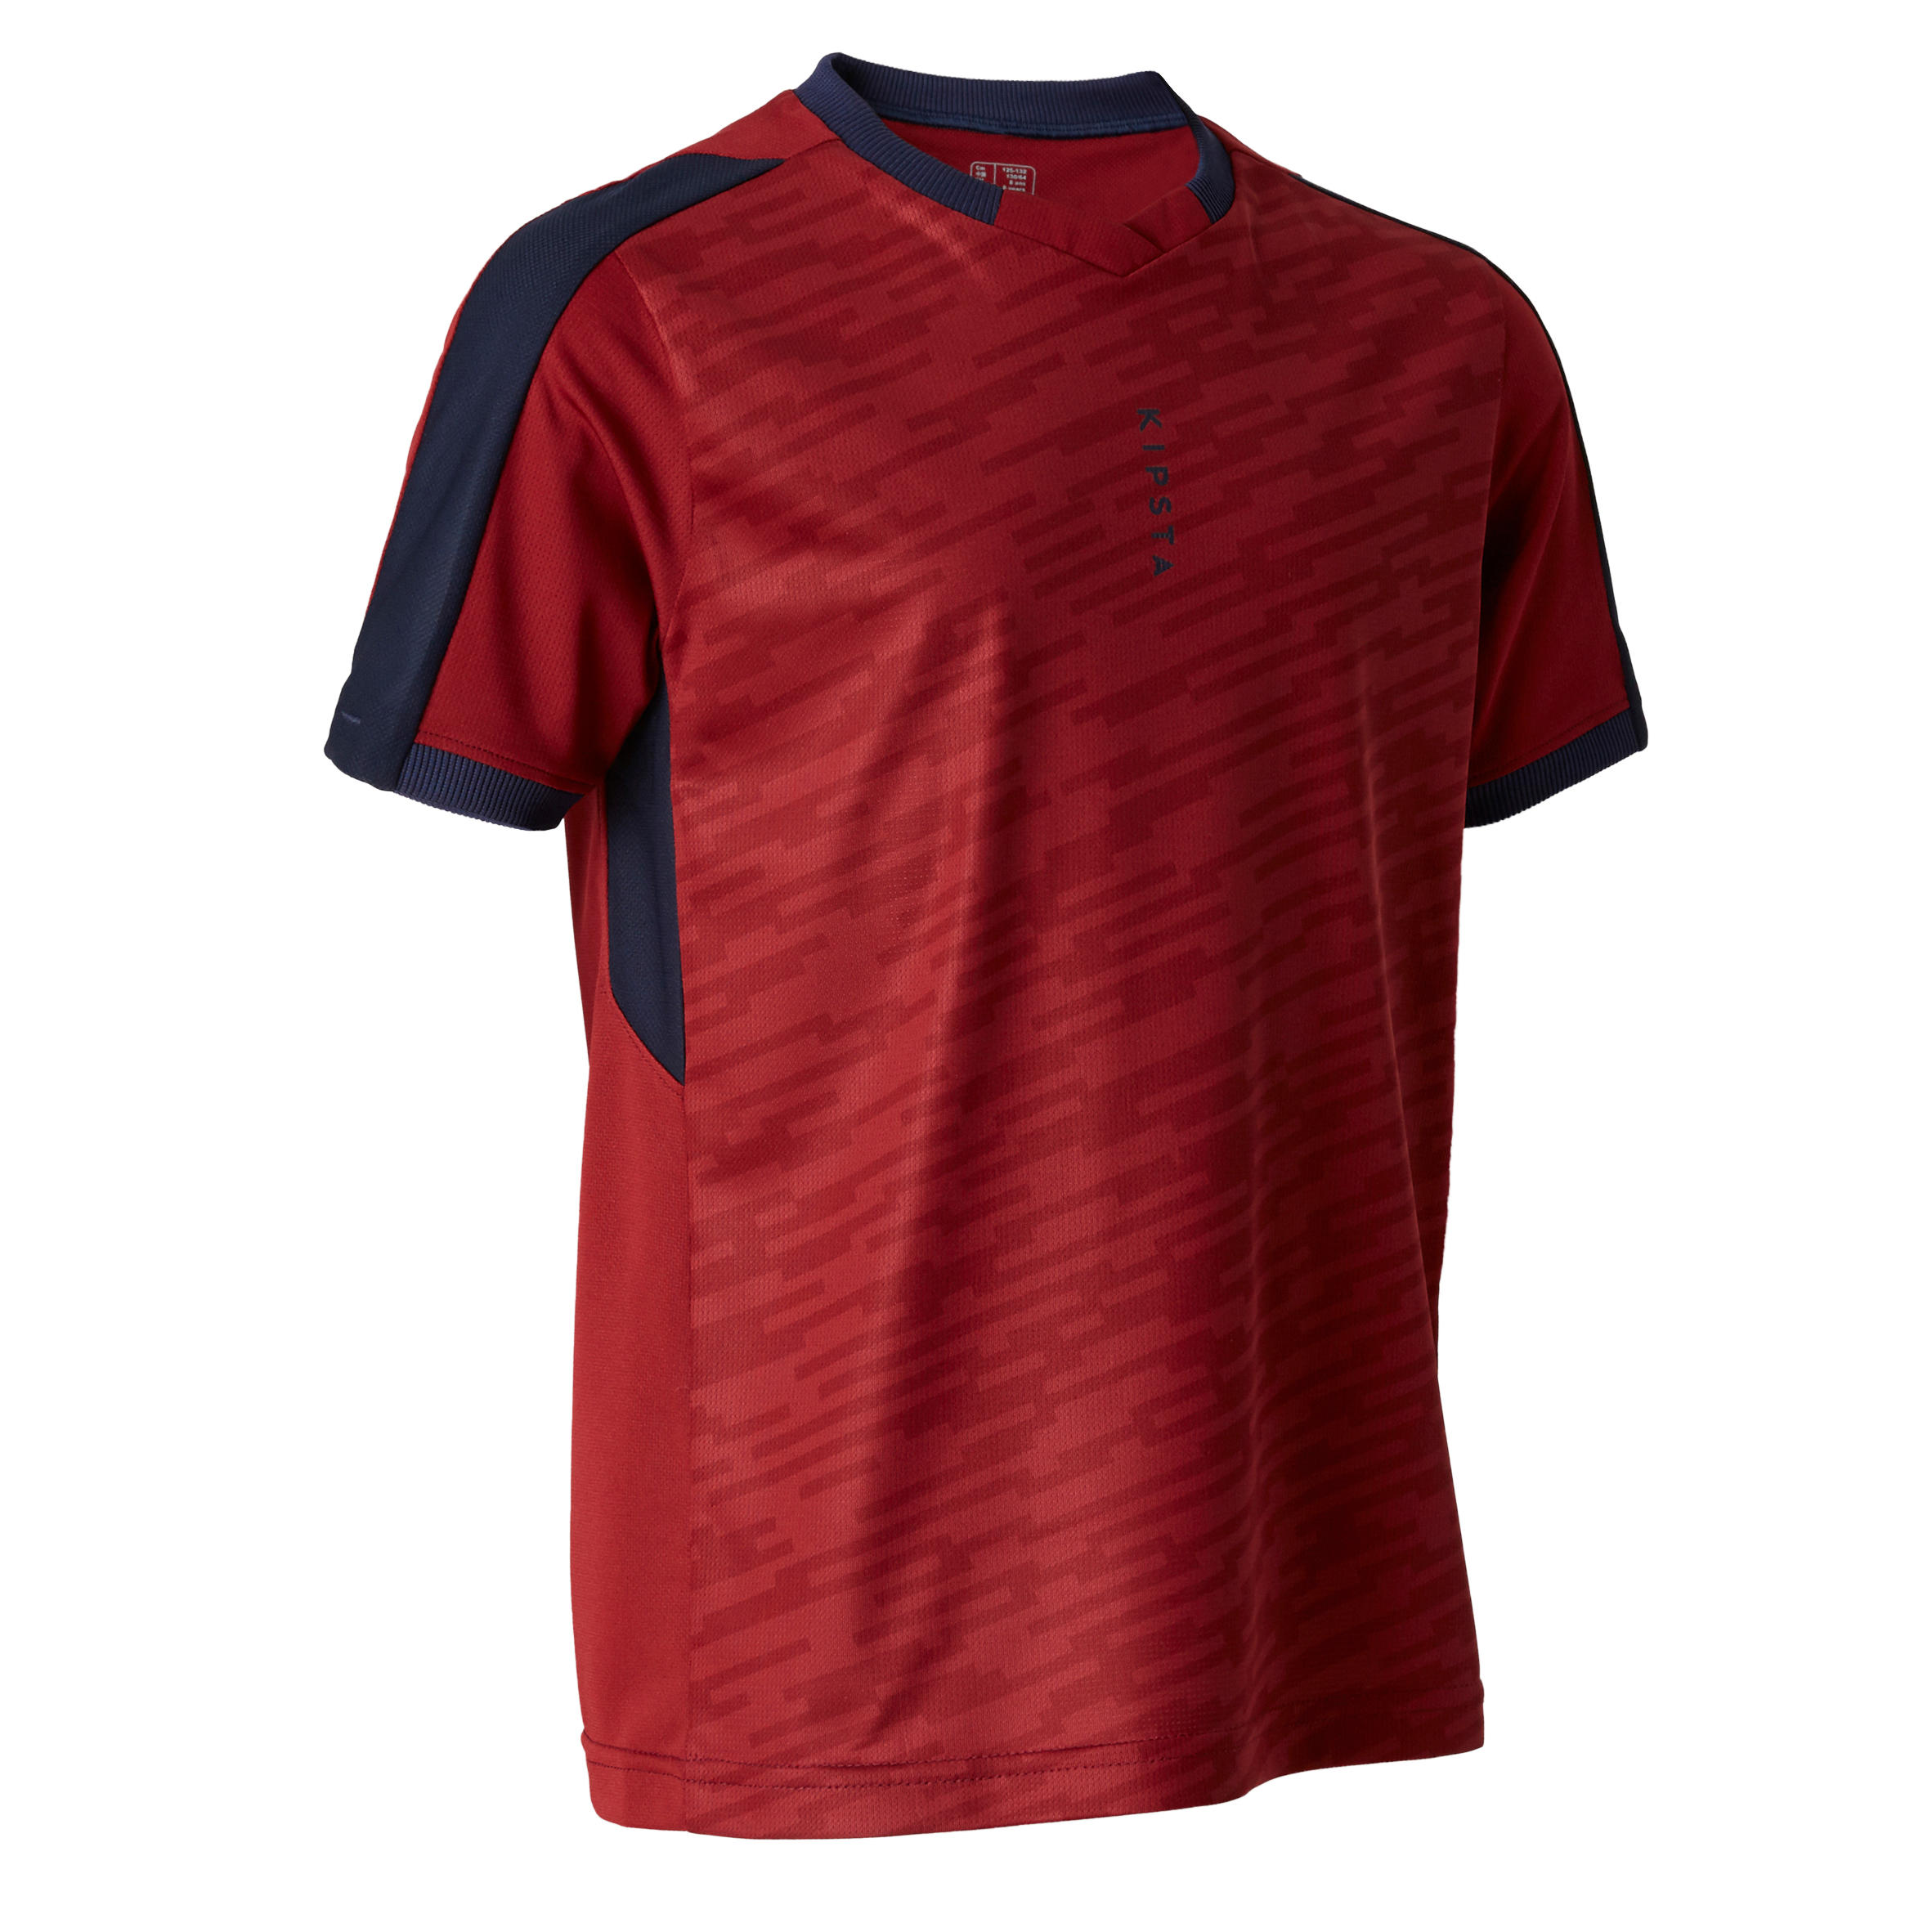 Kids' Short-Sleeved Football Shirt F520 - Burgundy/Navy 1/7